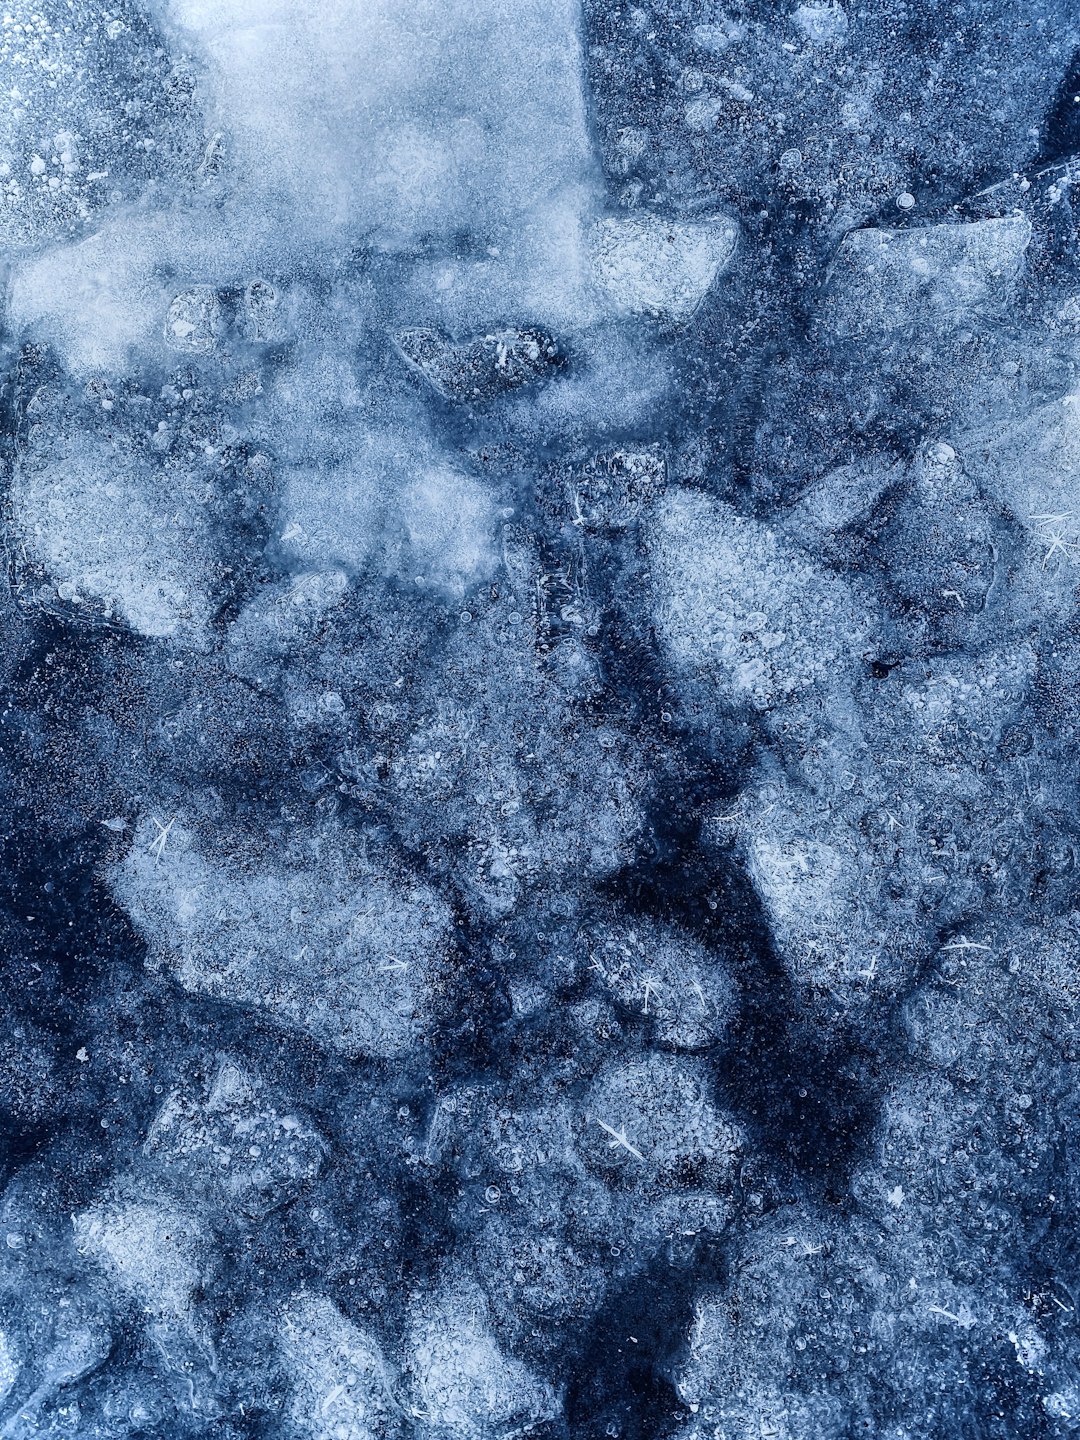 close up of ice, texture, top view, dark blue tones –ar 3:4